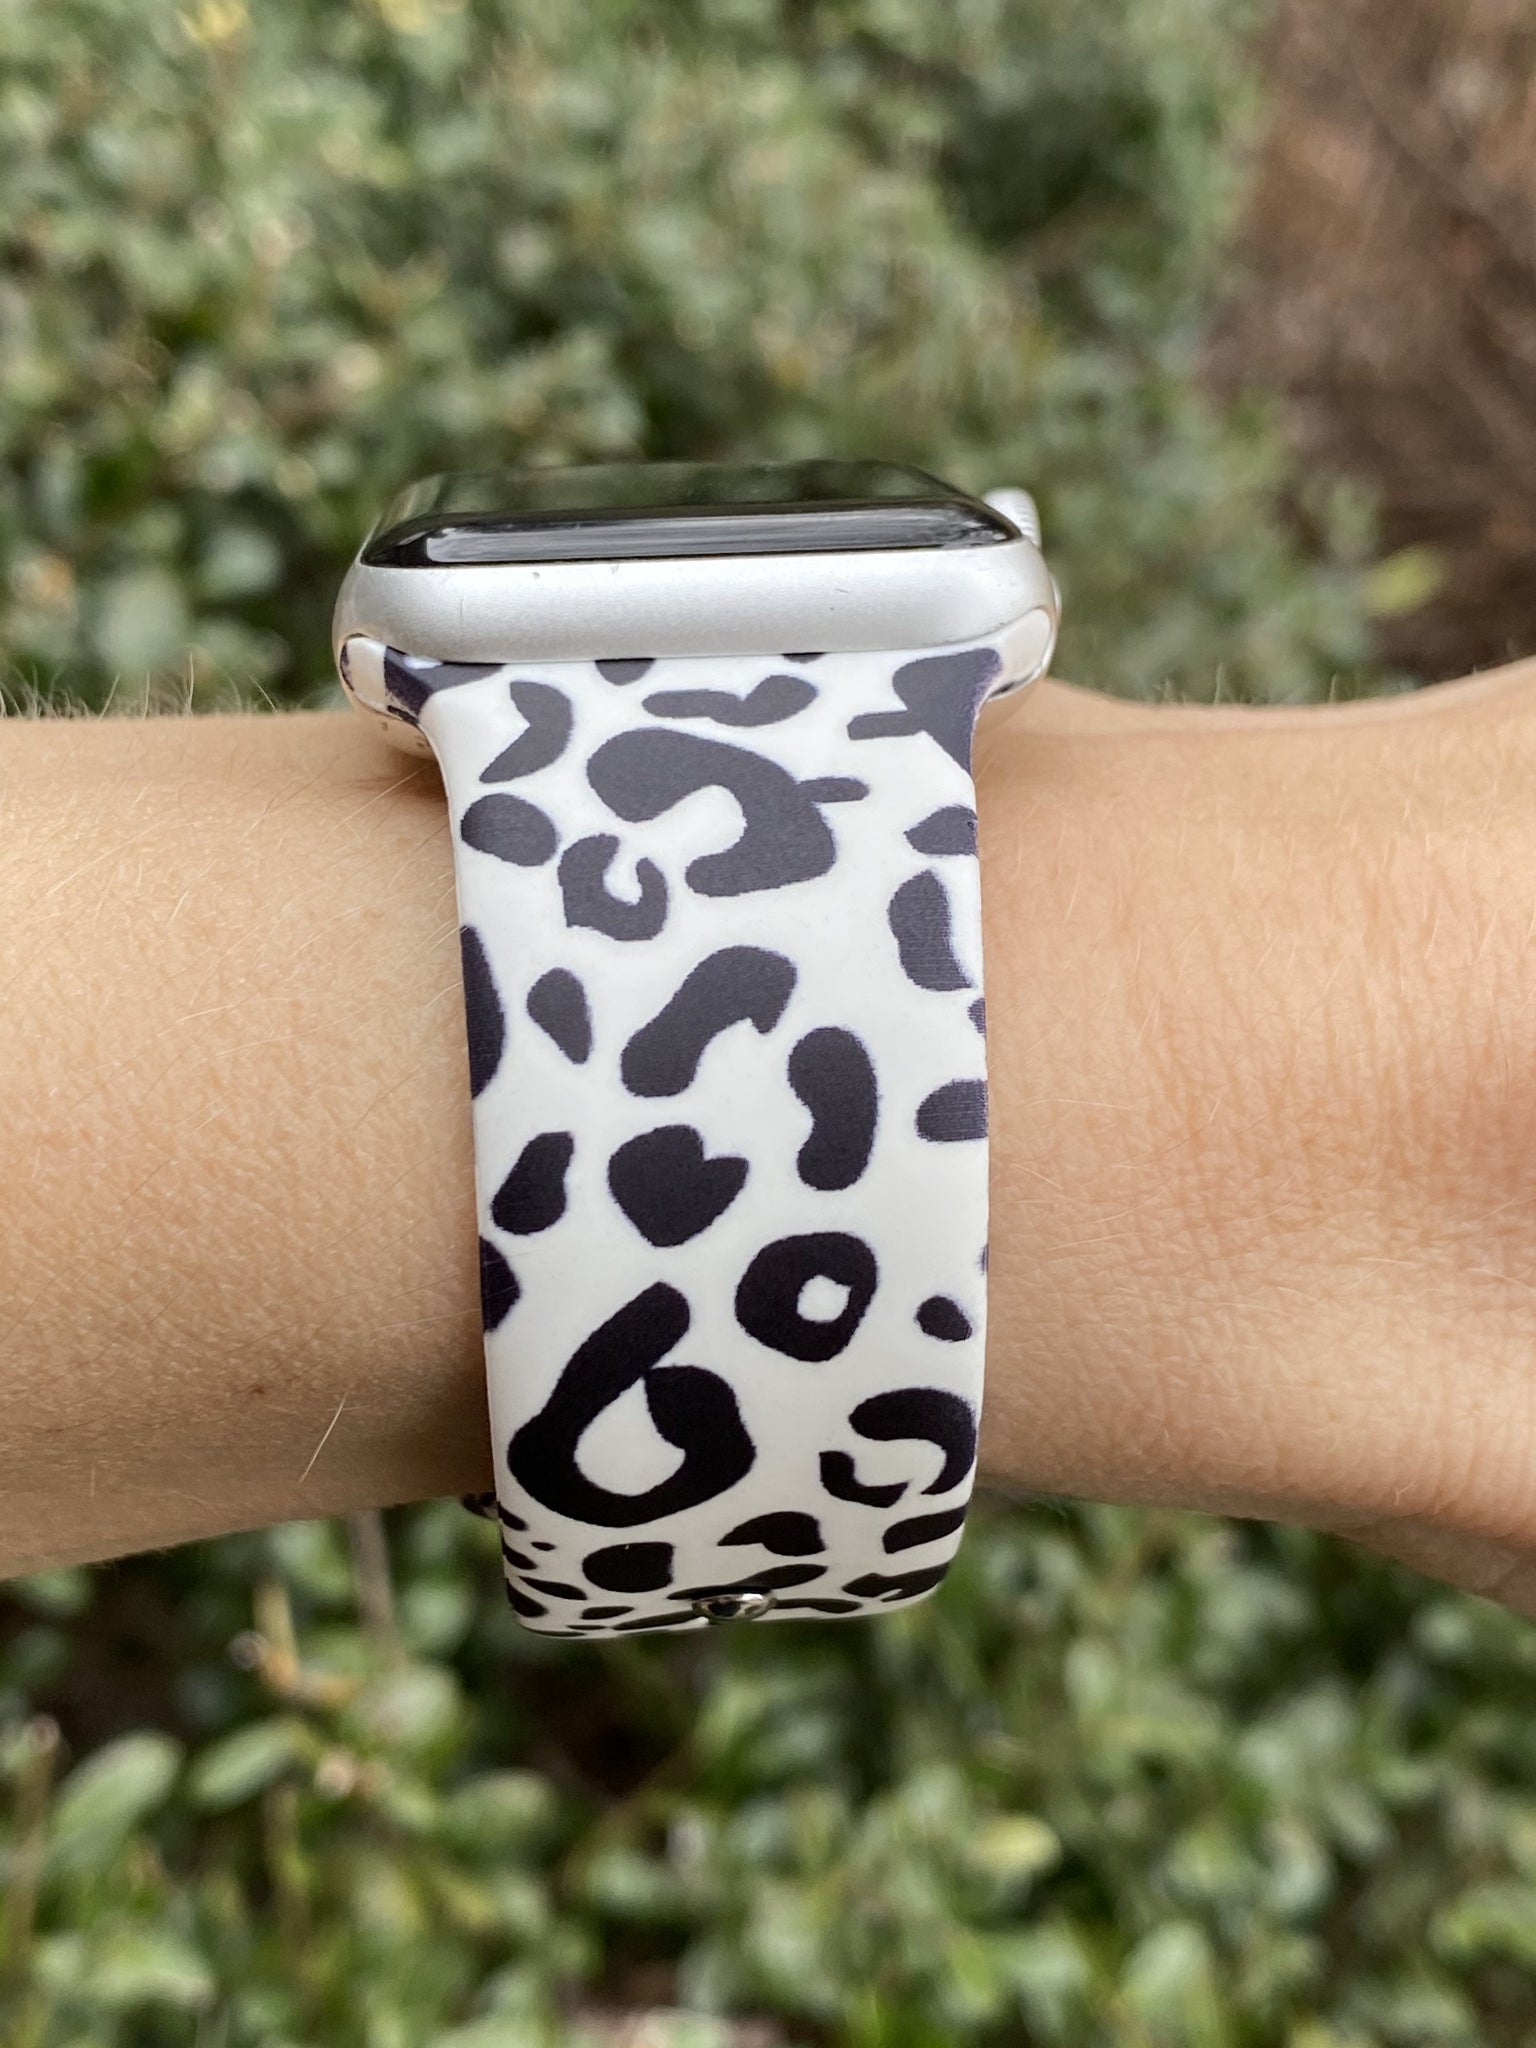 Leopard Apple Watch Band Purple Watch Band Cheetah Watch 